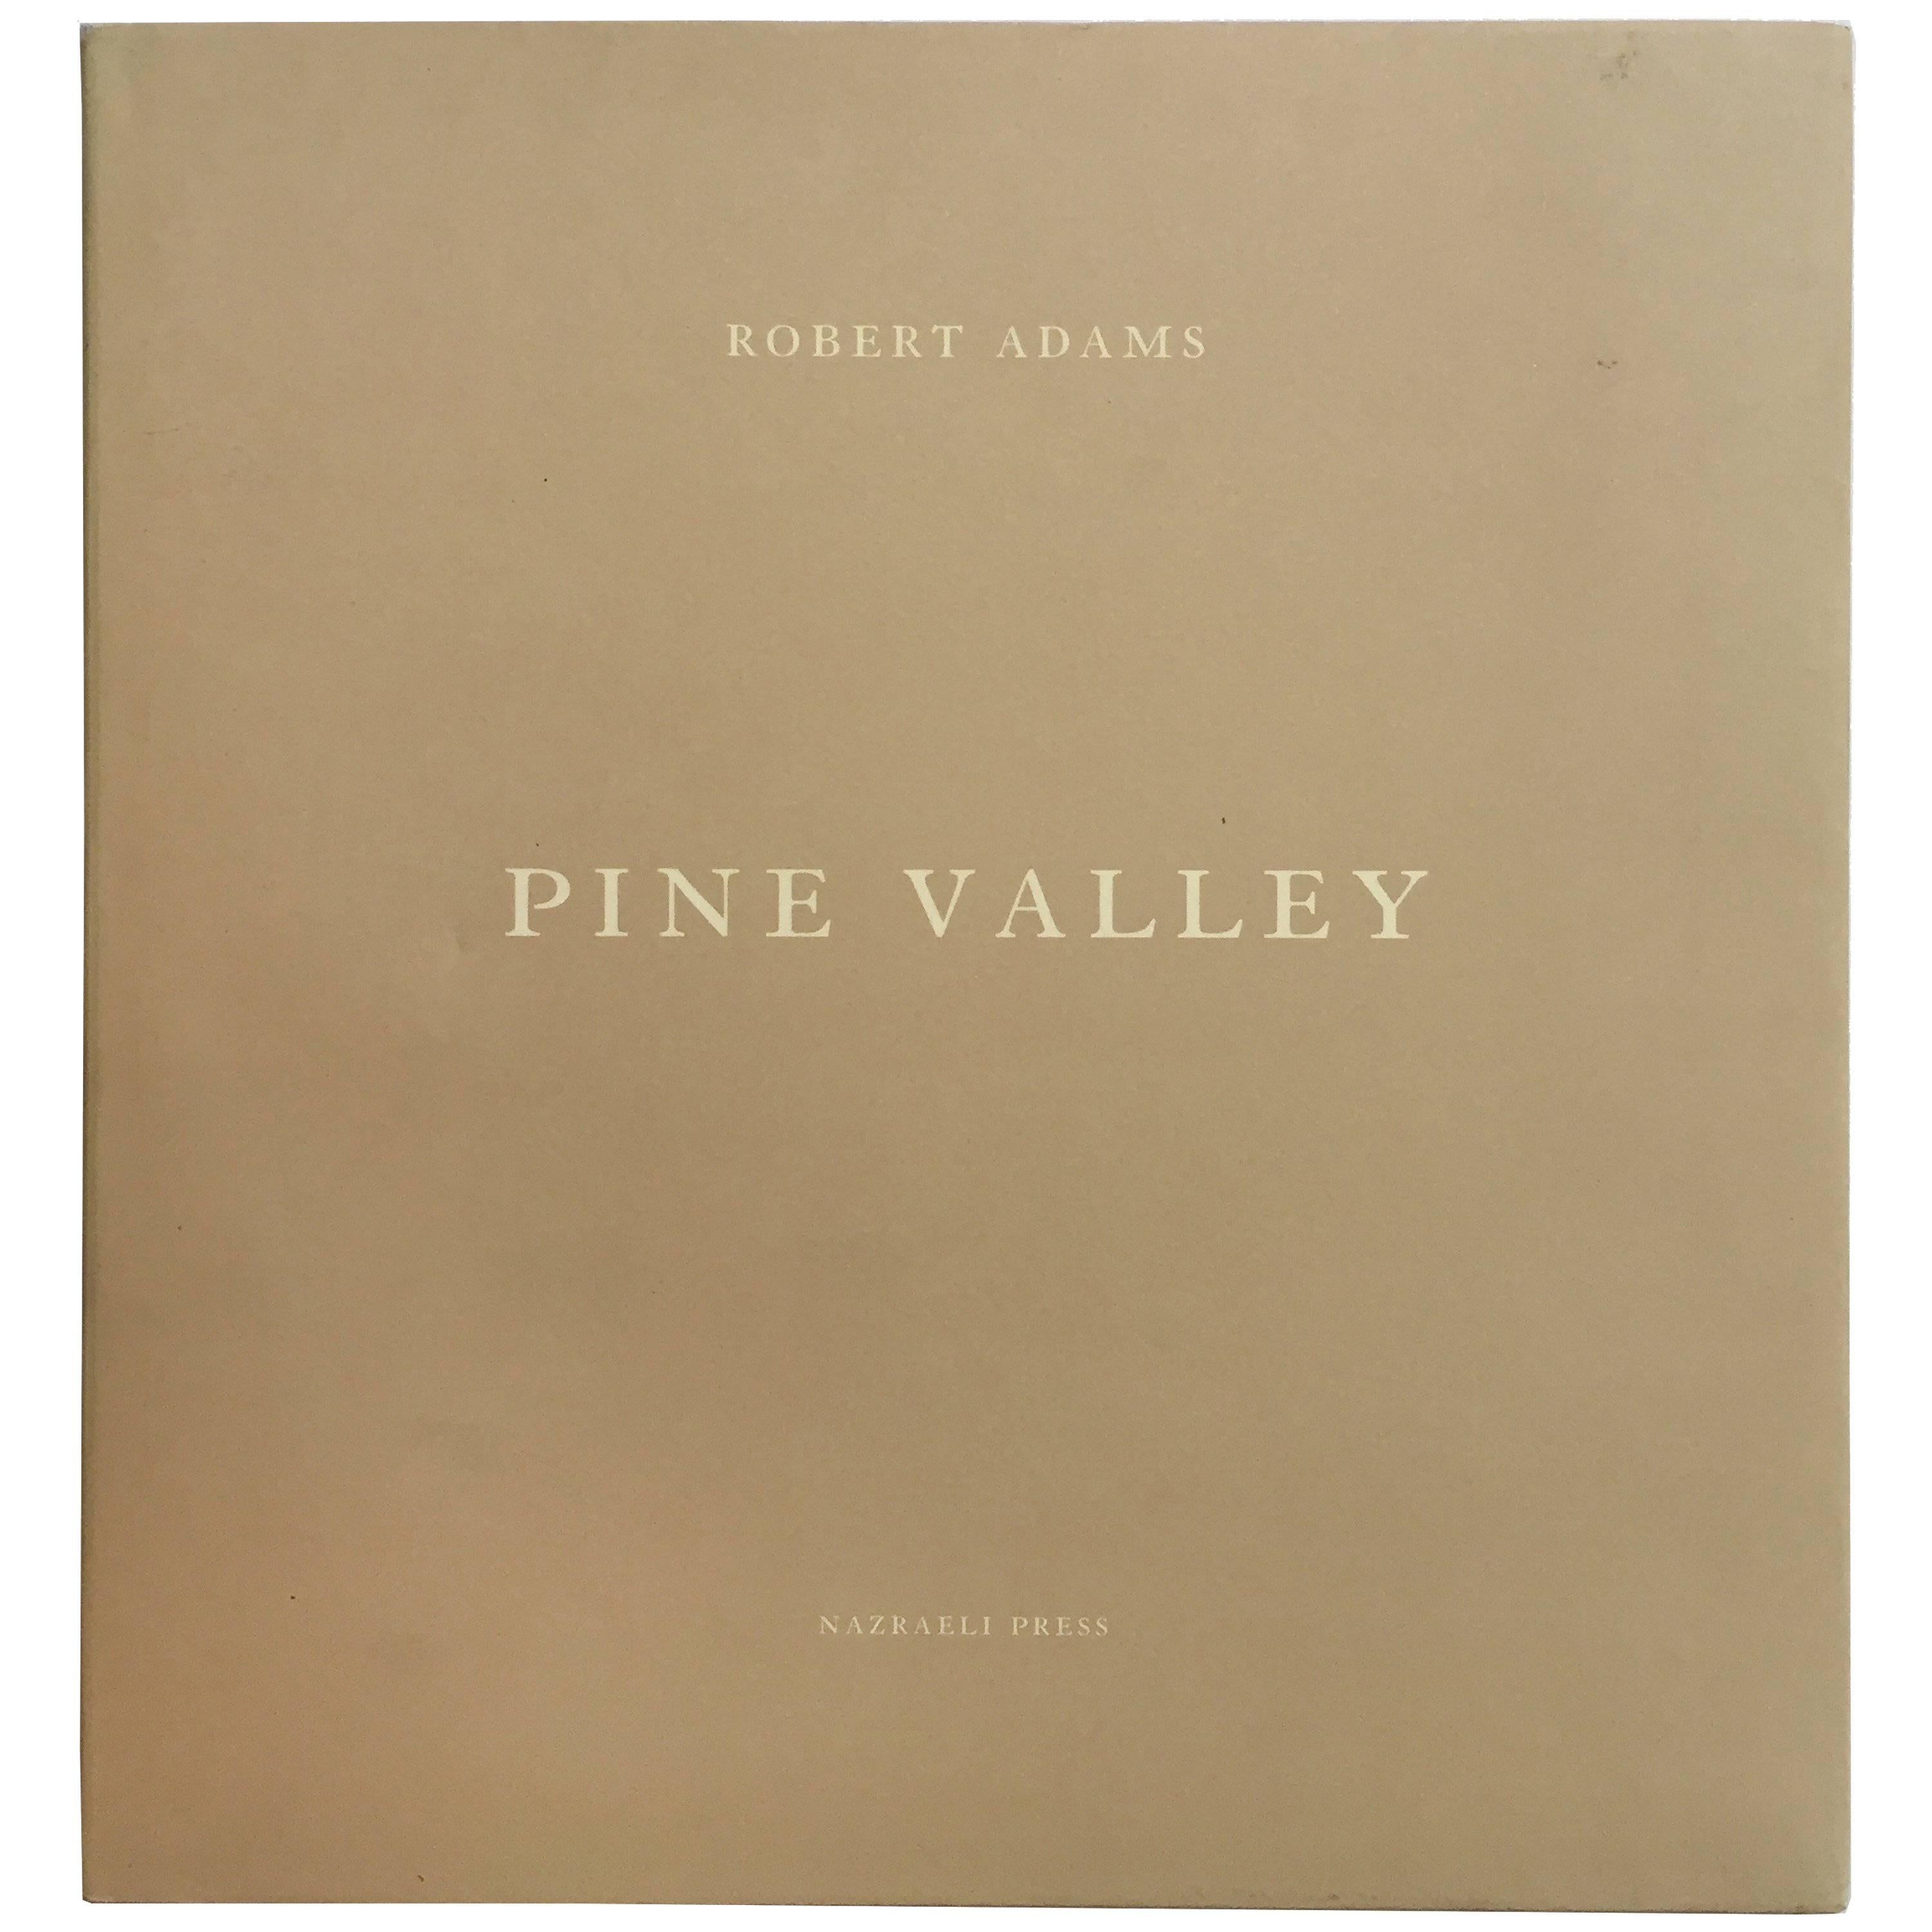 La vallée de la pin - Robert Adams - 1ère édition signée, Nazraeli Press, 2005